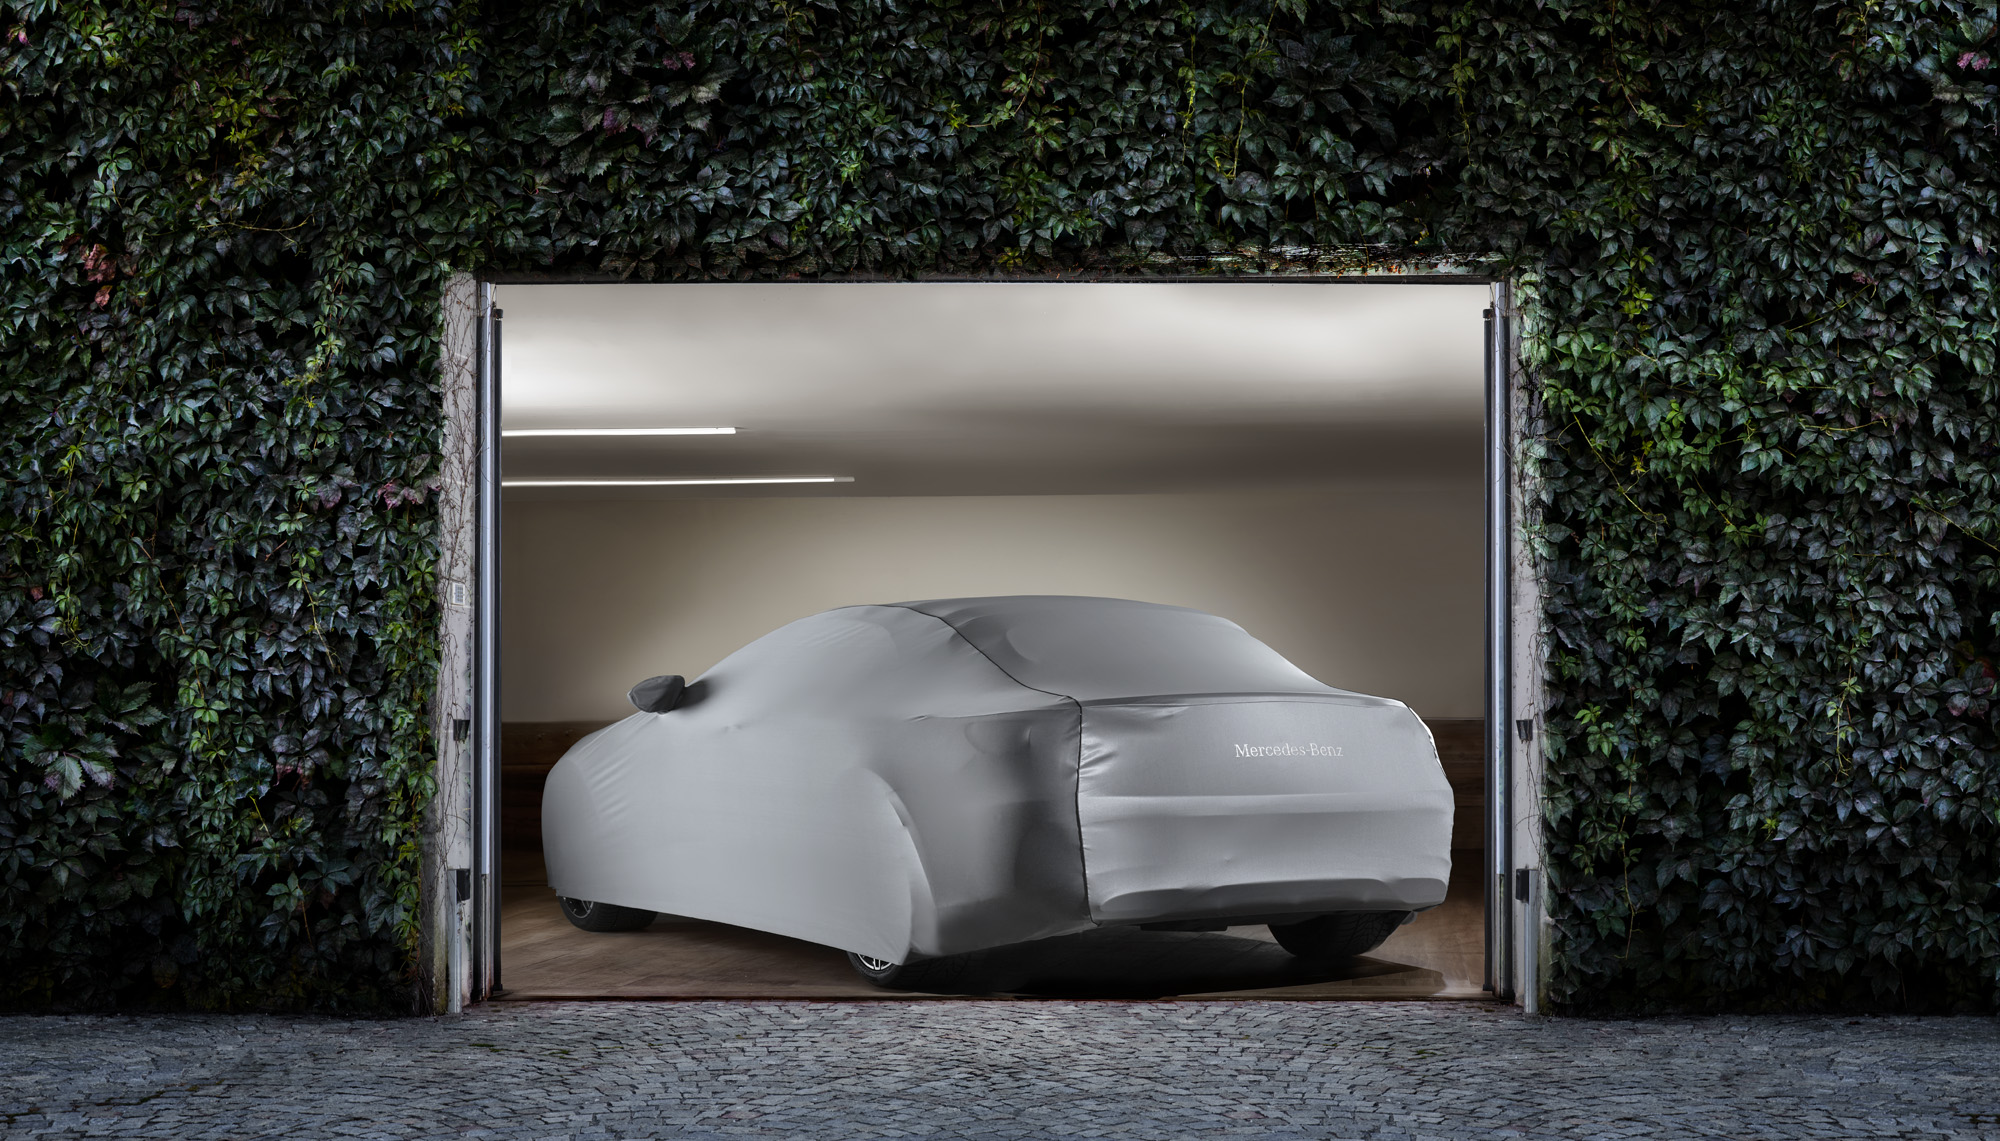 Mercedes-Benz Car Covers Home